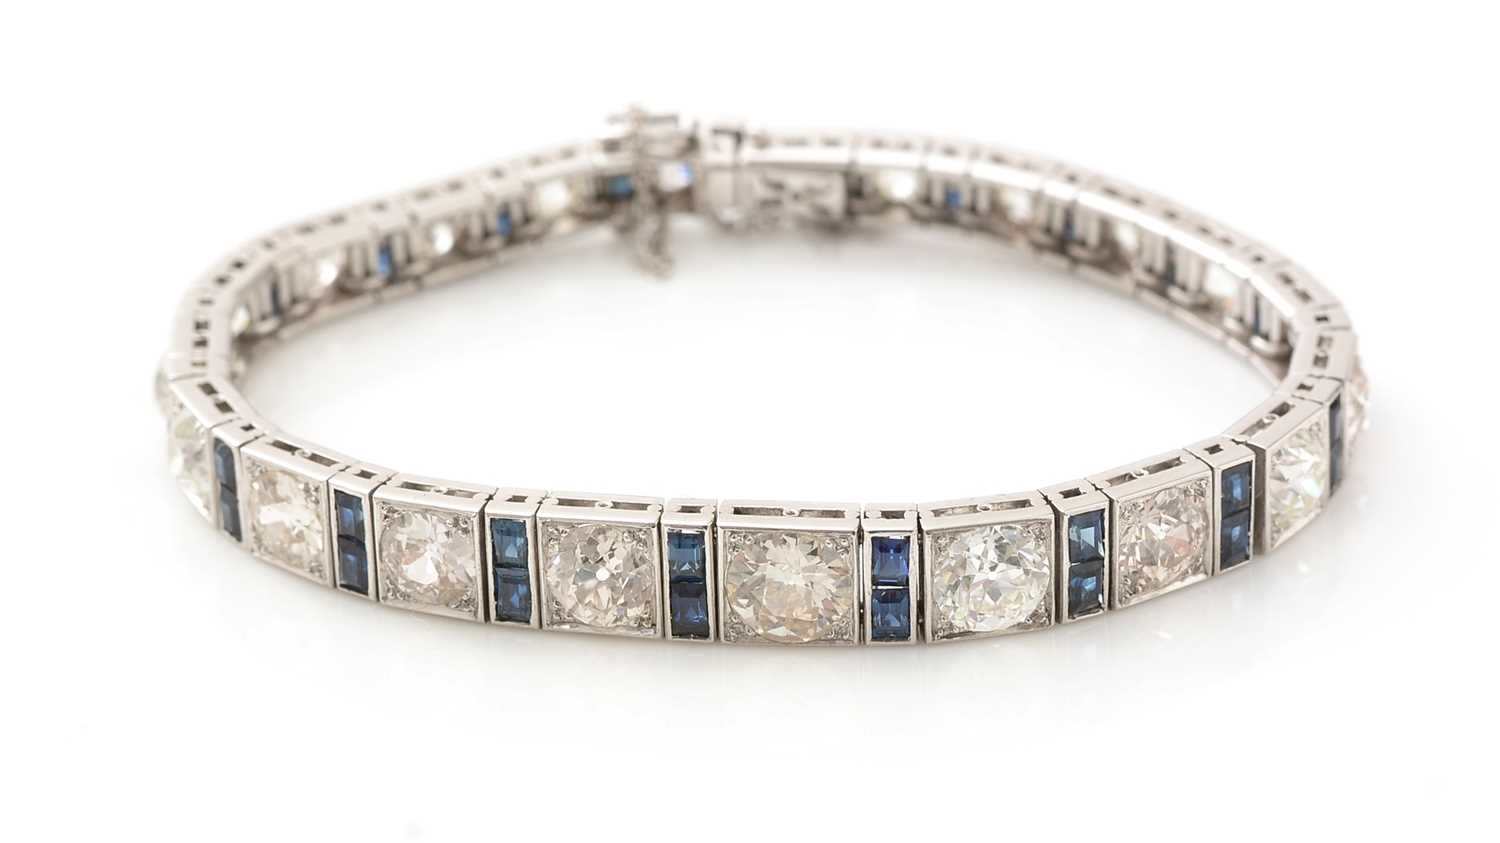 Lot 557 - A fine graduated diamond and sapphire bracelet